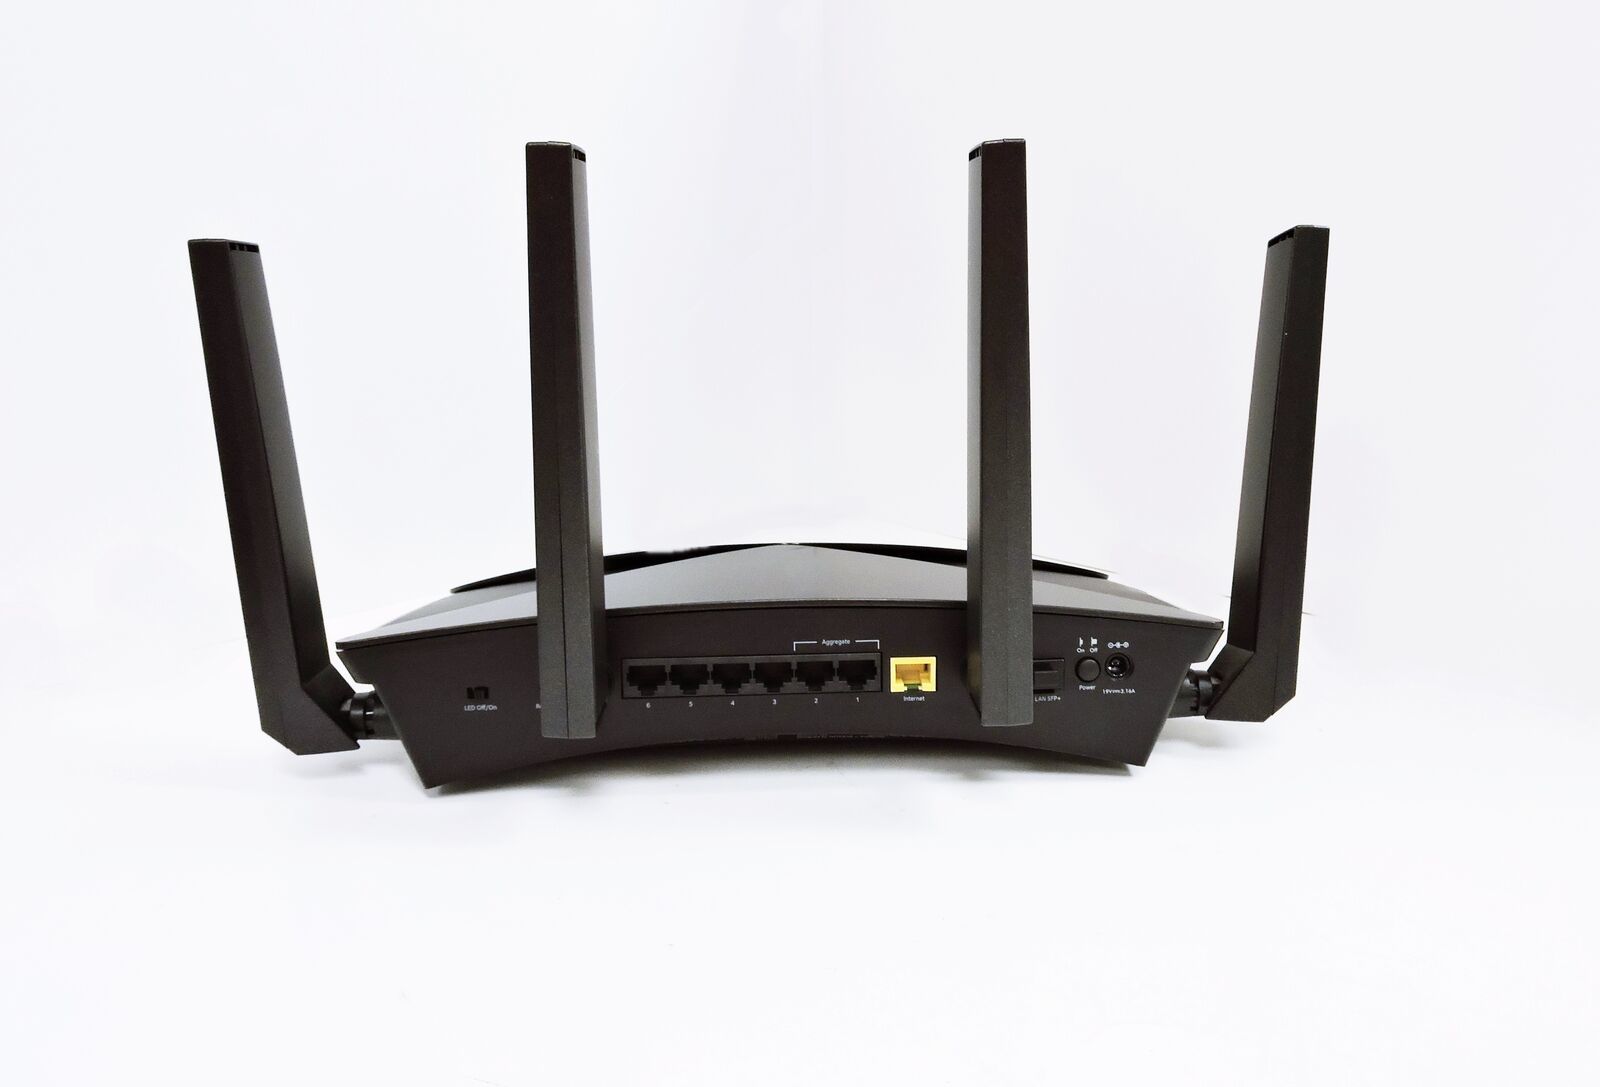 Netgear Nighthawk X10 R9000 AD7200 Smart Wi-Fi Router - Wireless Routers